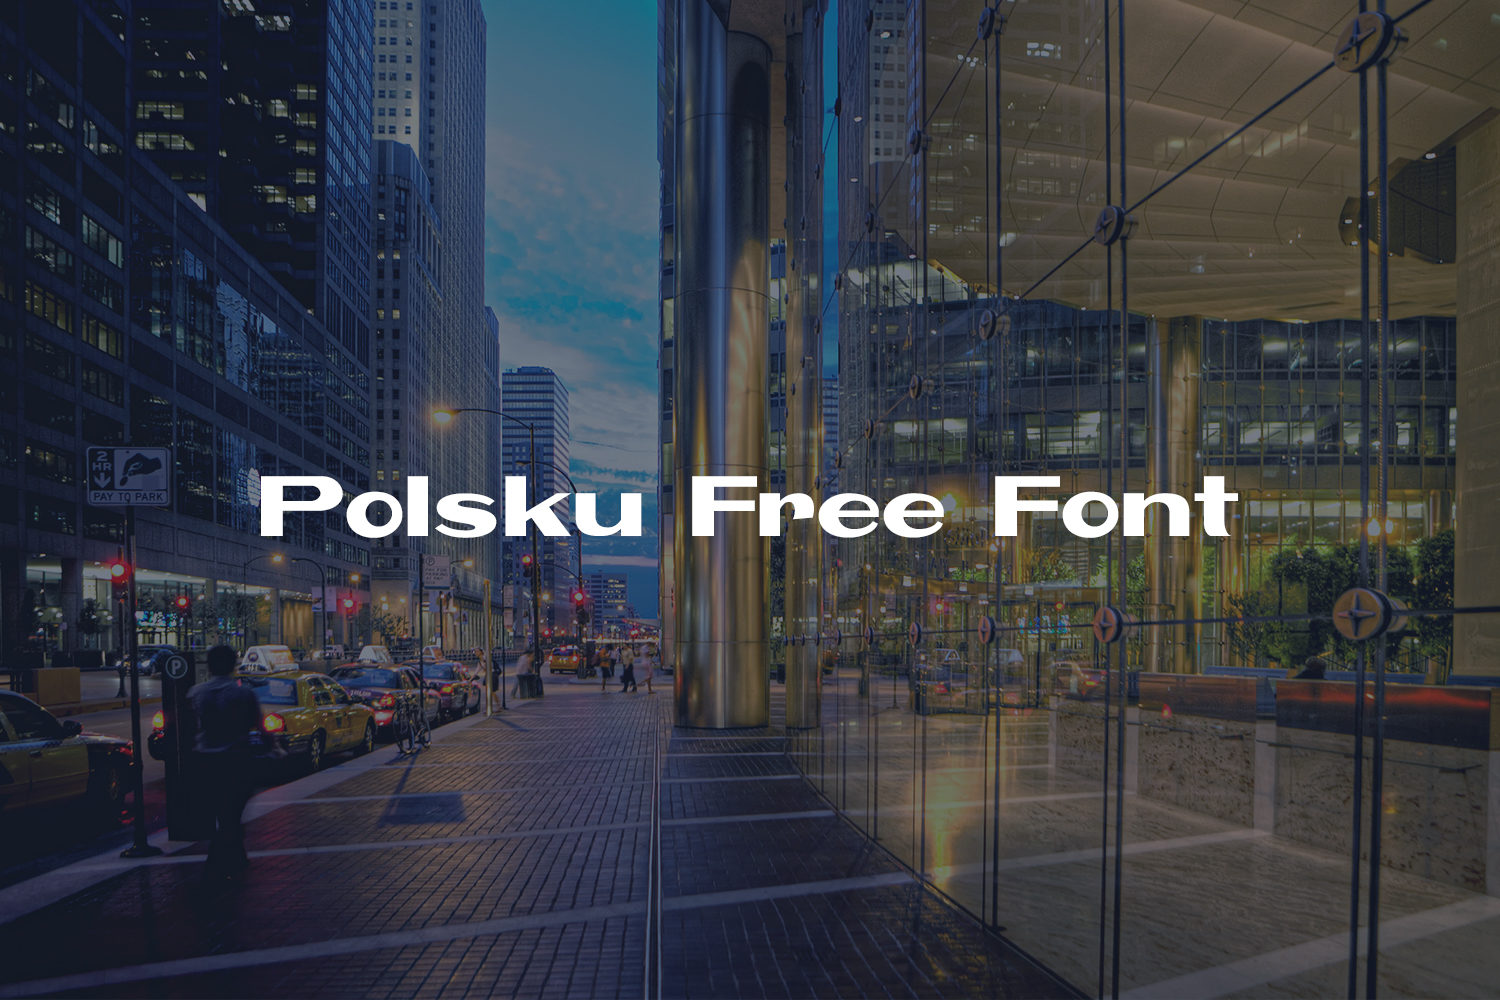 Polsku Free Font